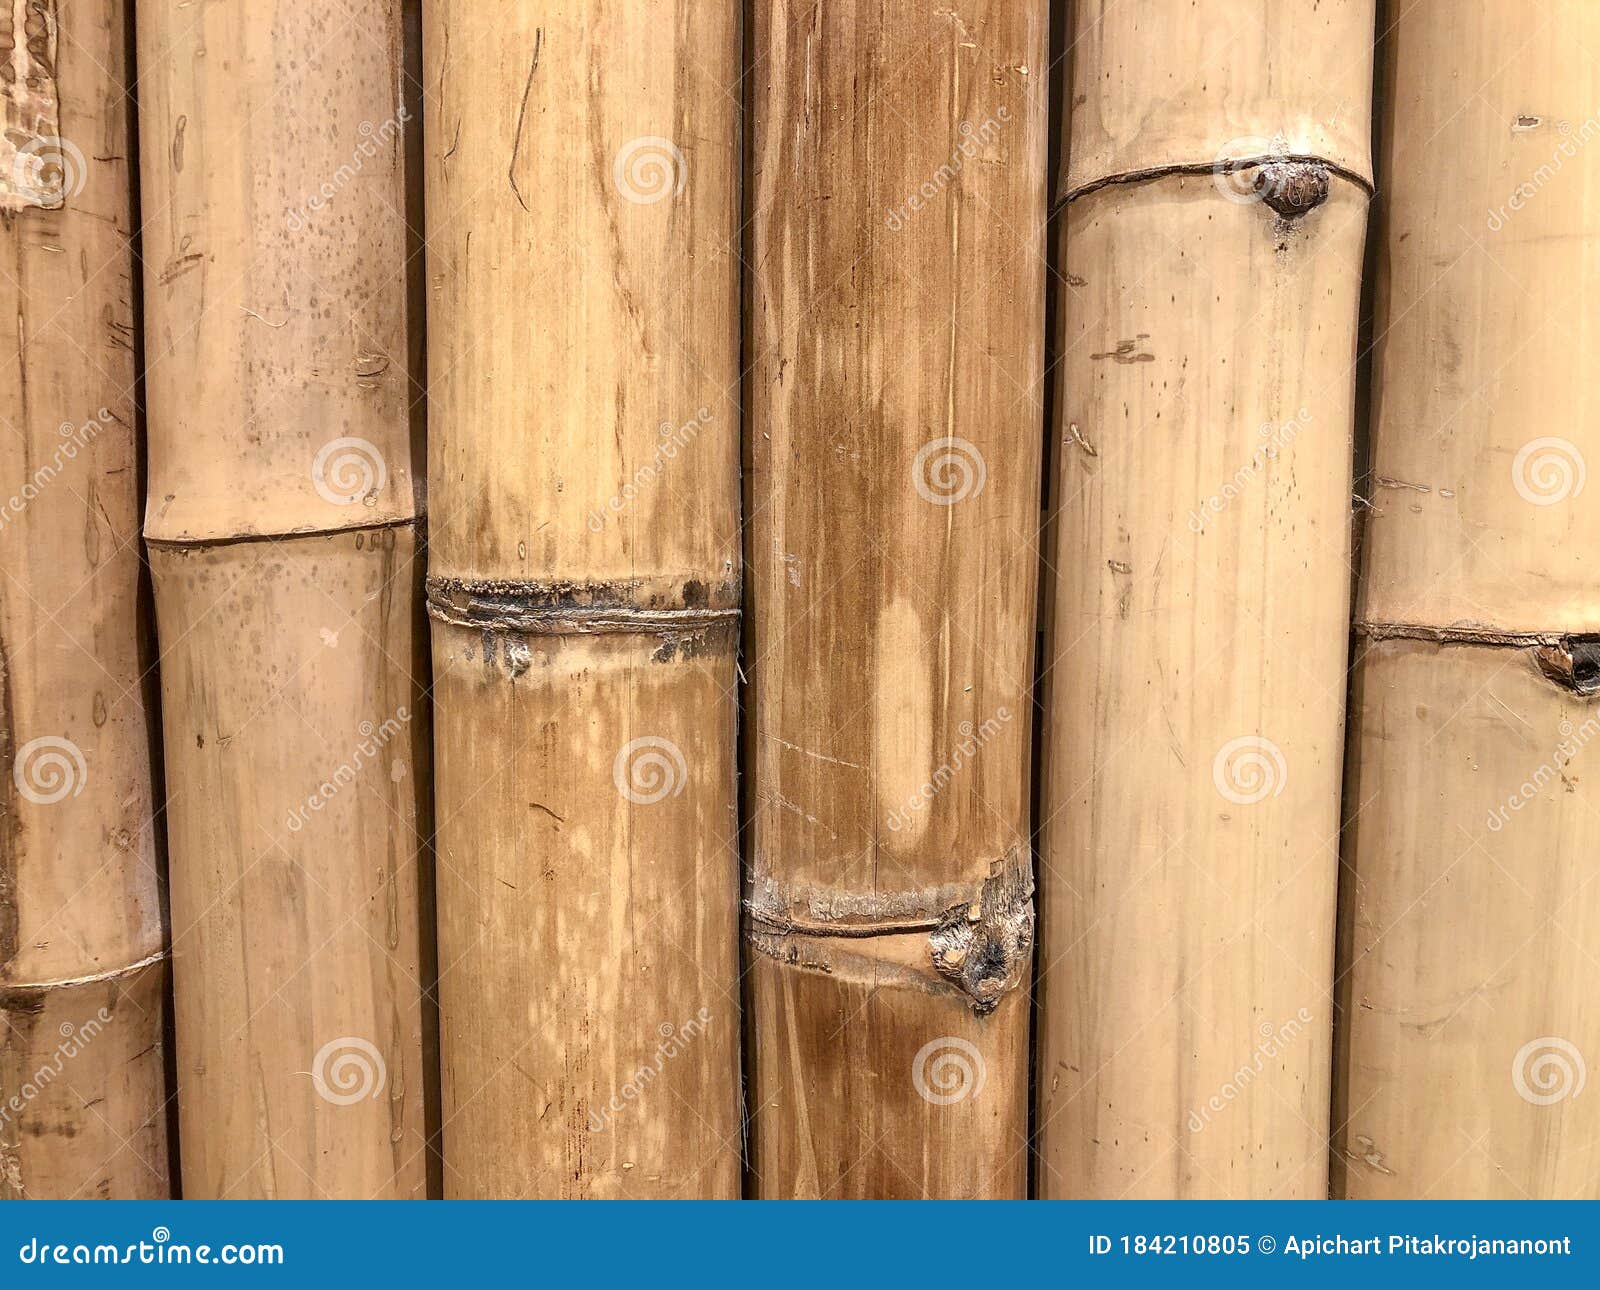 Wall tiles stock image. Image of bamboo, nature, panel - 184210805